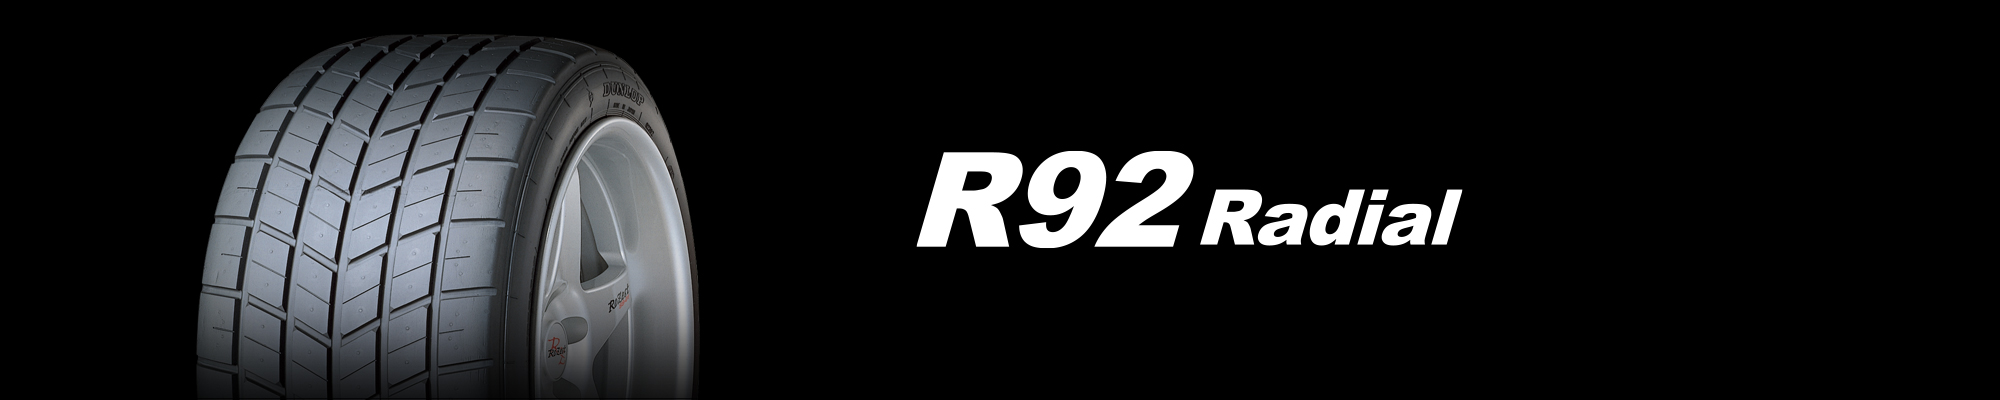 R92 Radial